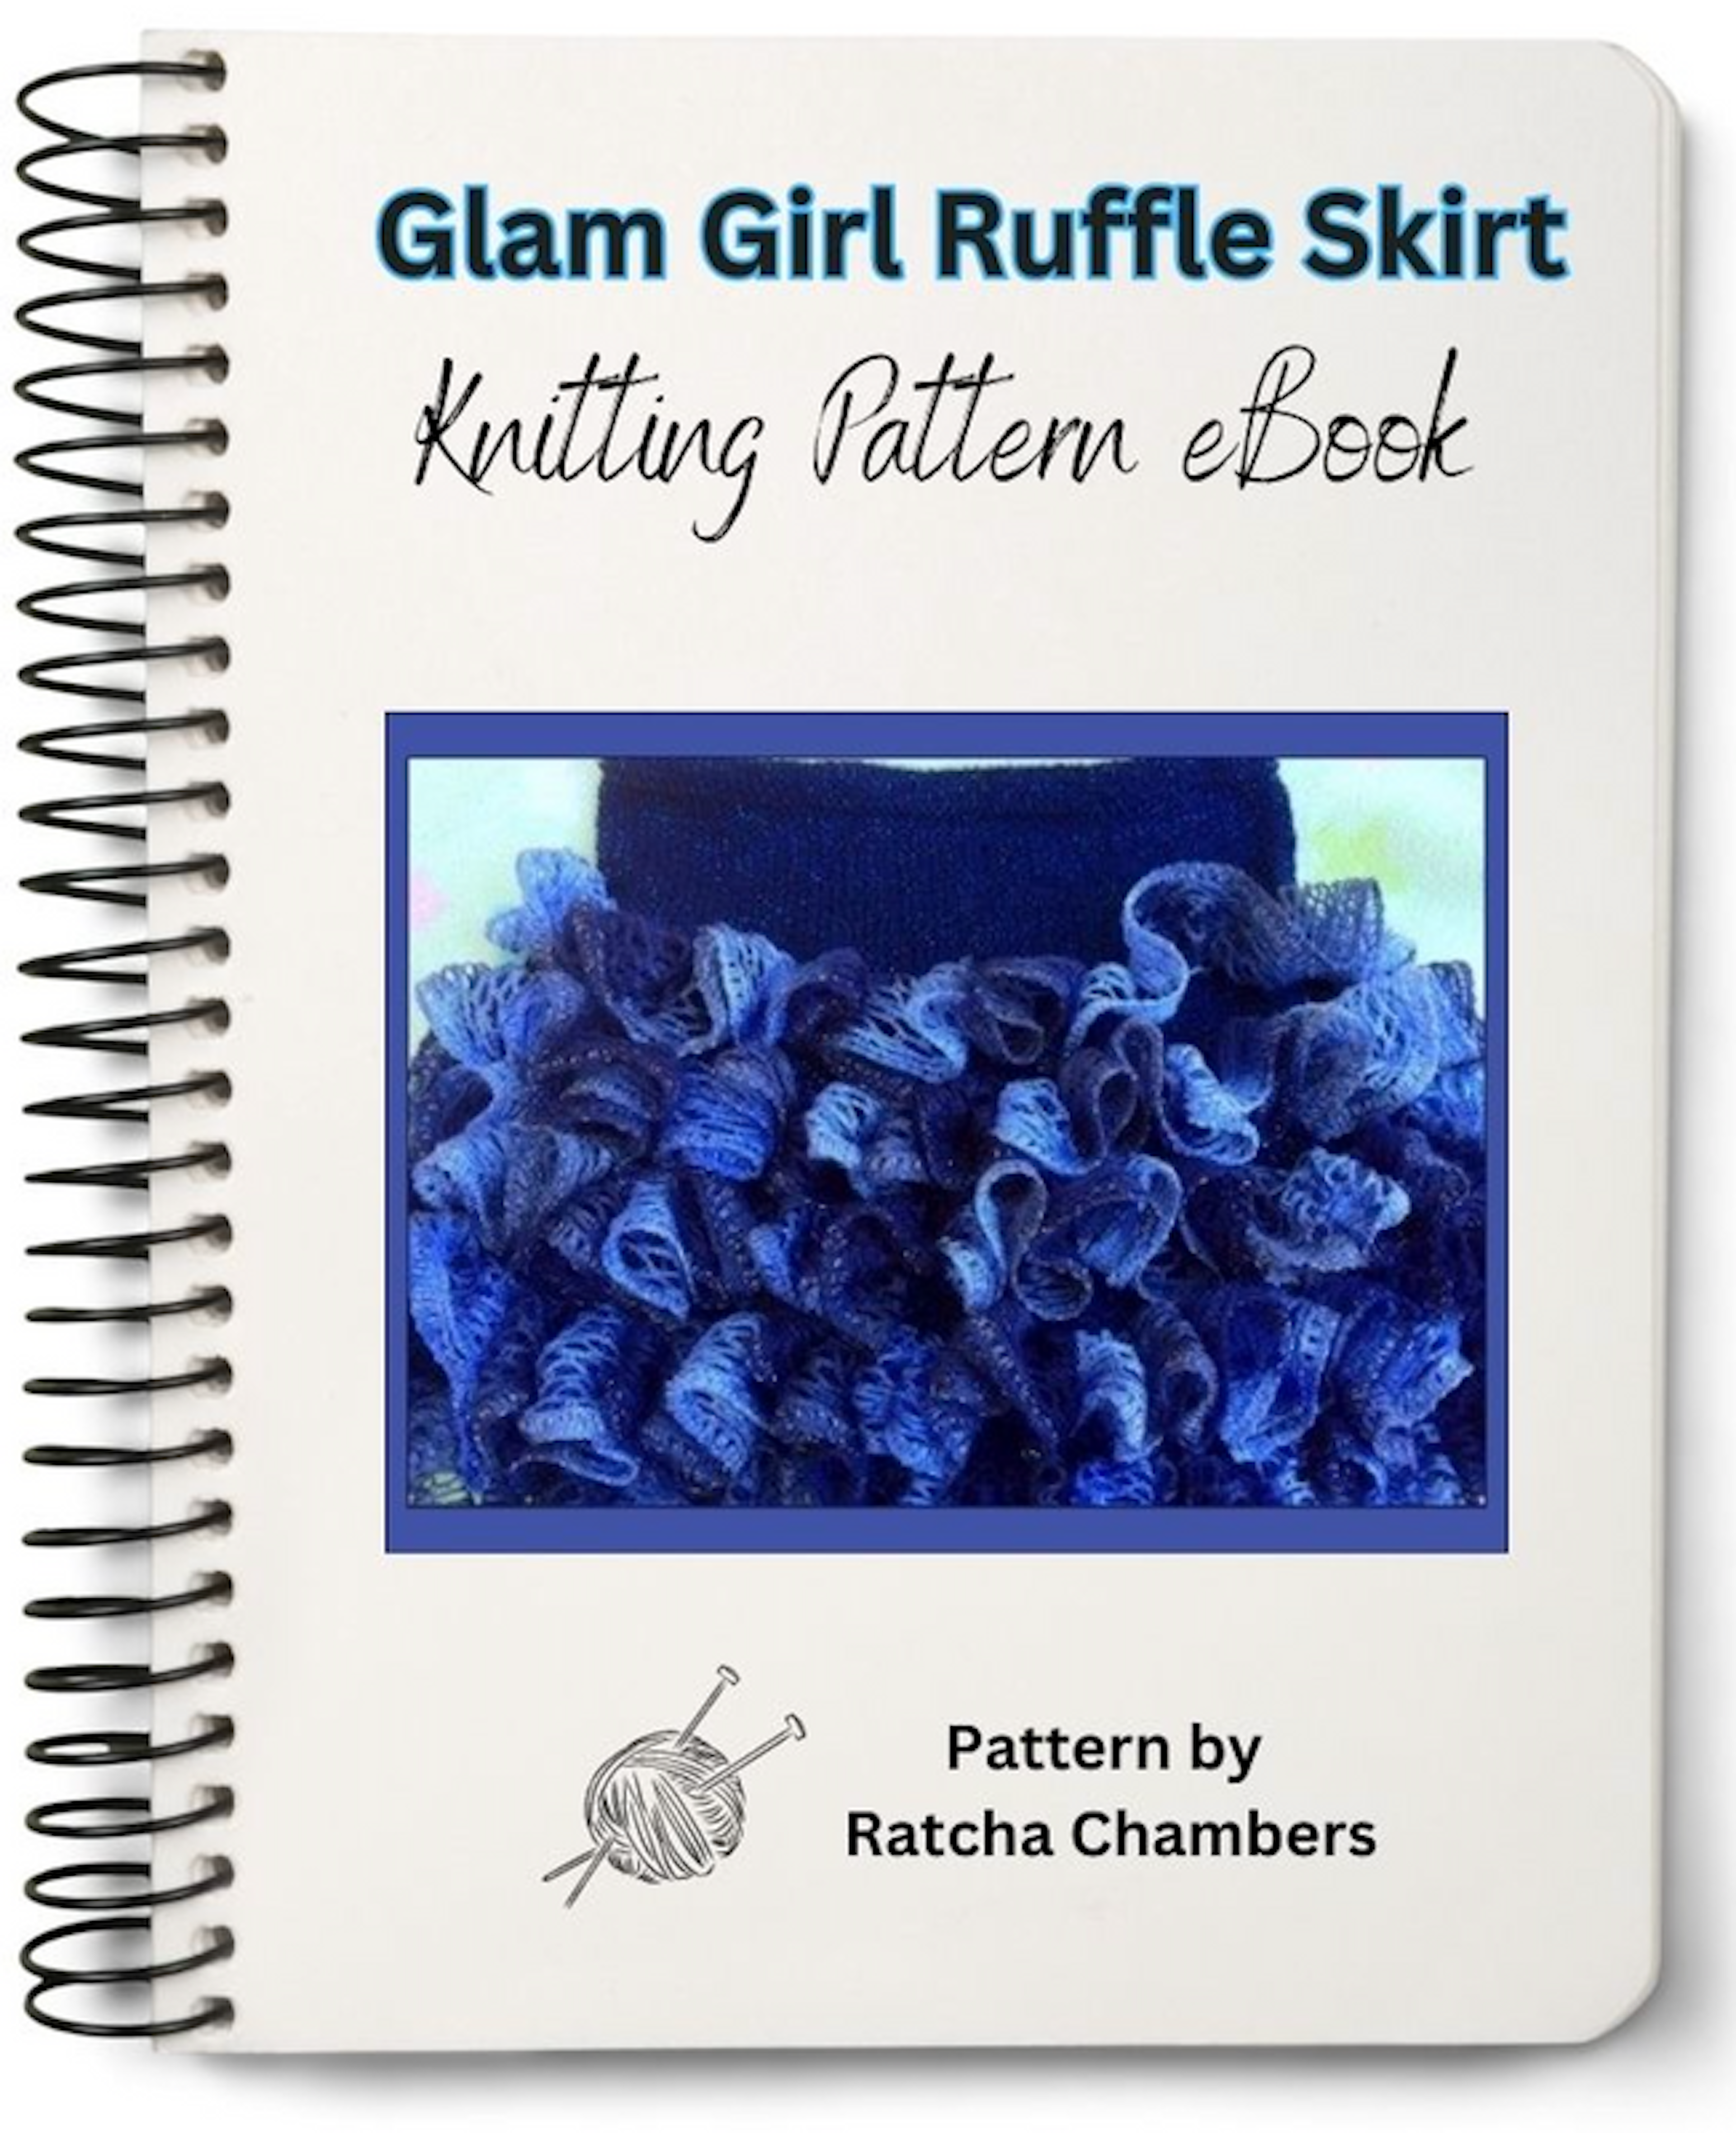 Glam Girl Ruffle Skirt Knitting Pattern